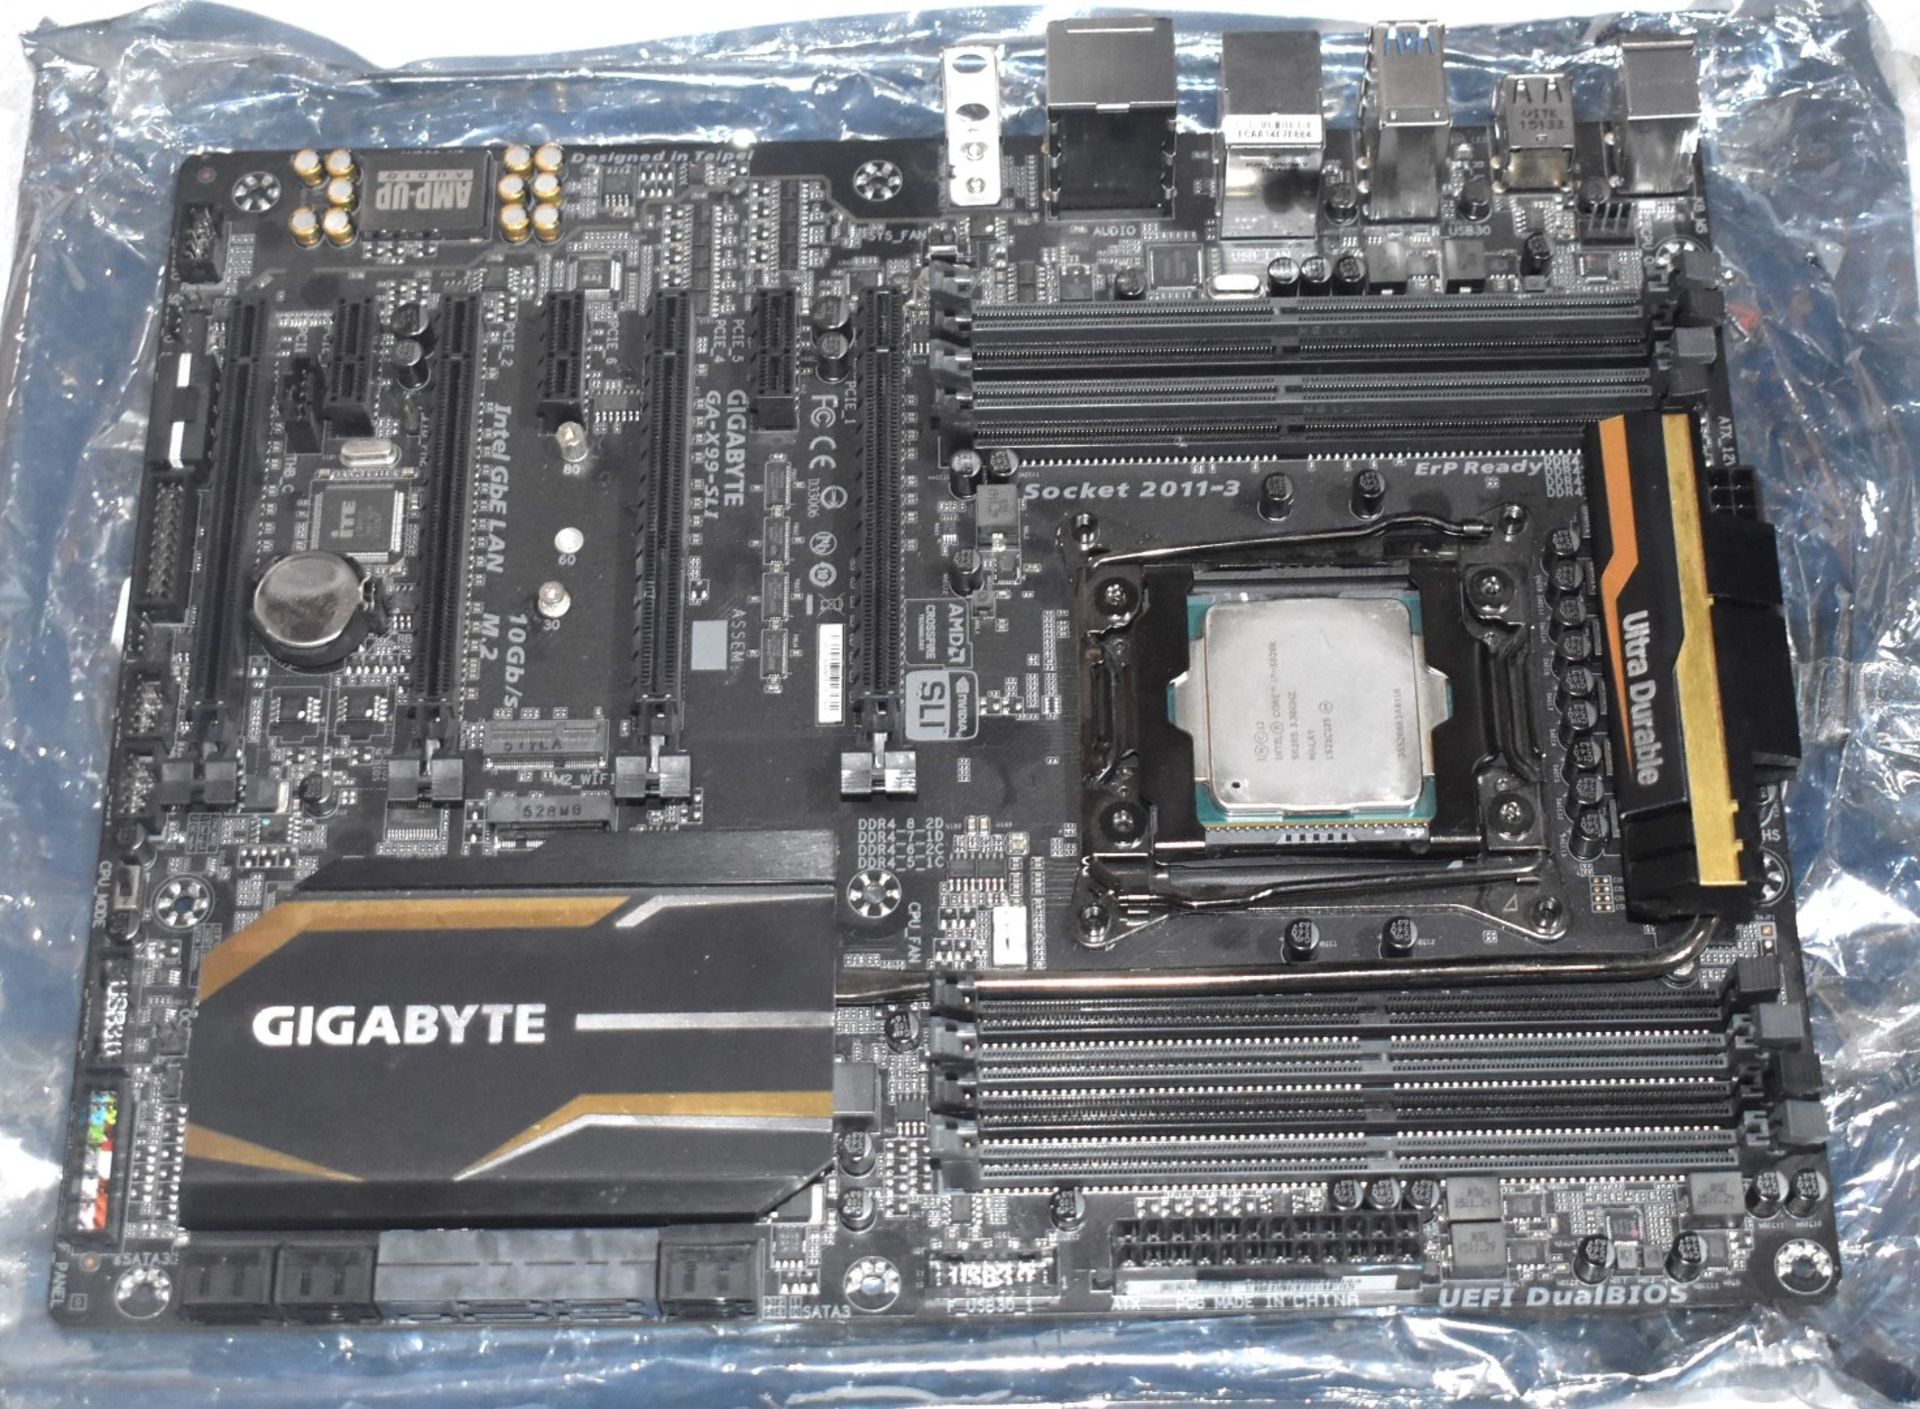 1 x Gigabyte GA-X99-SLI Motherboard With an Intel Core i7-5820k Processor